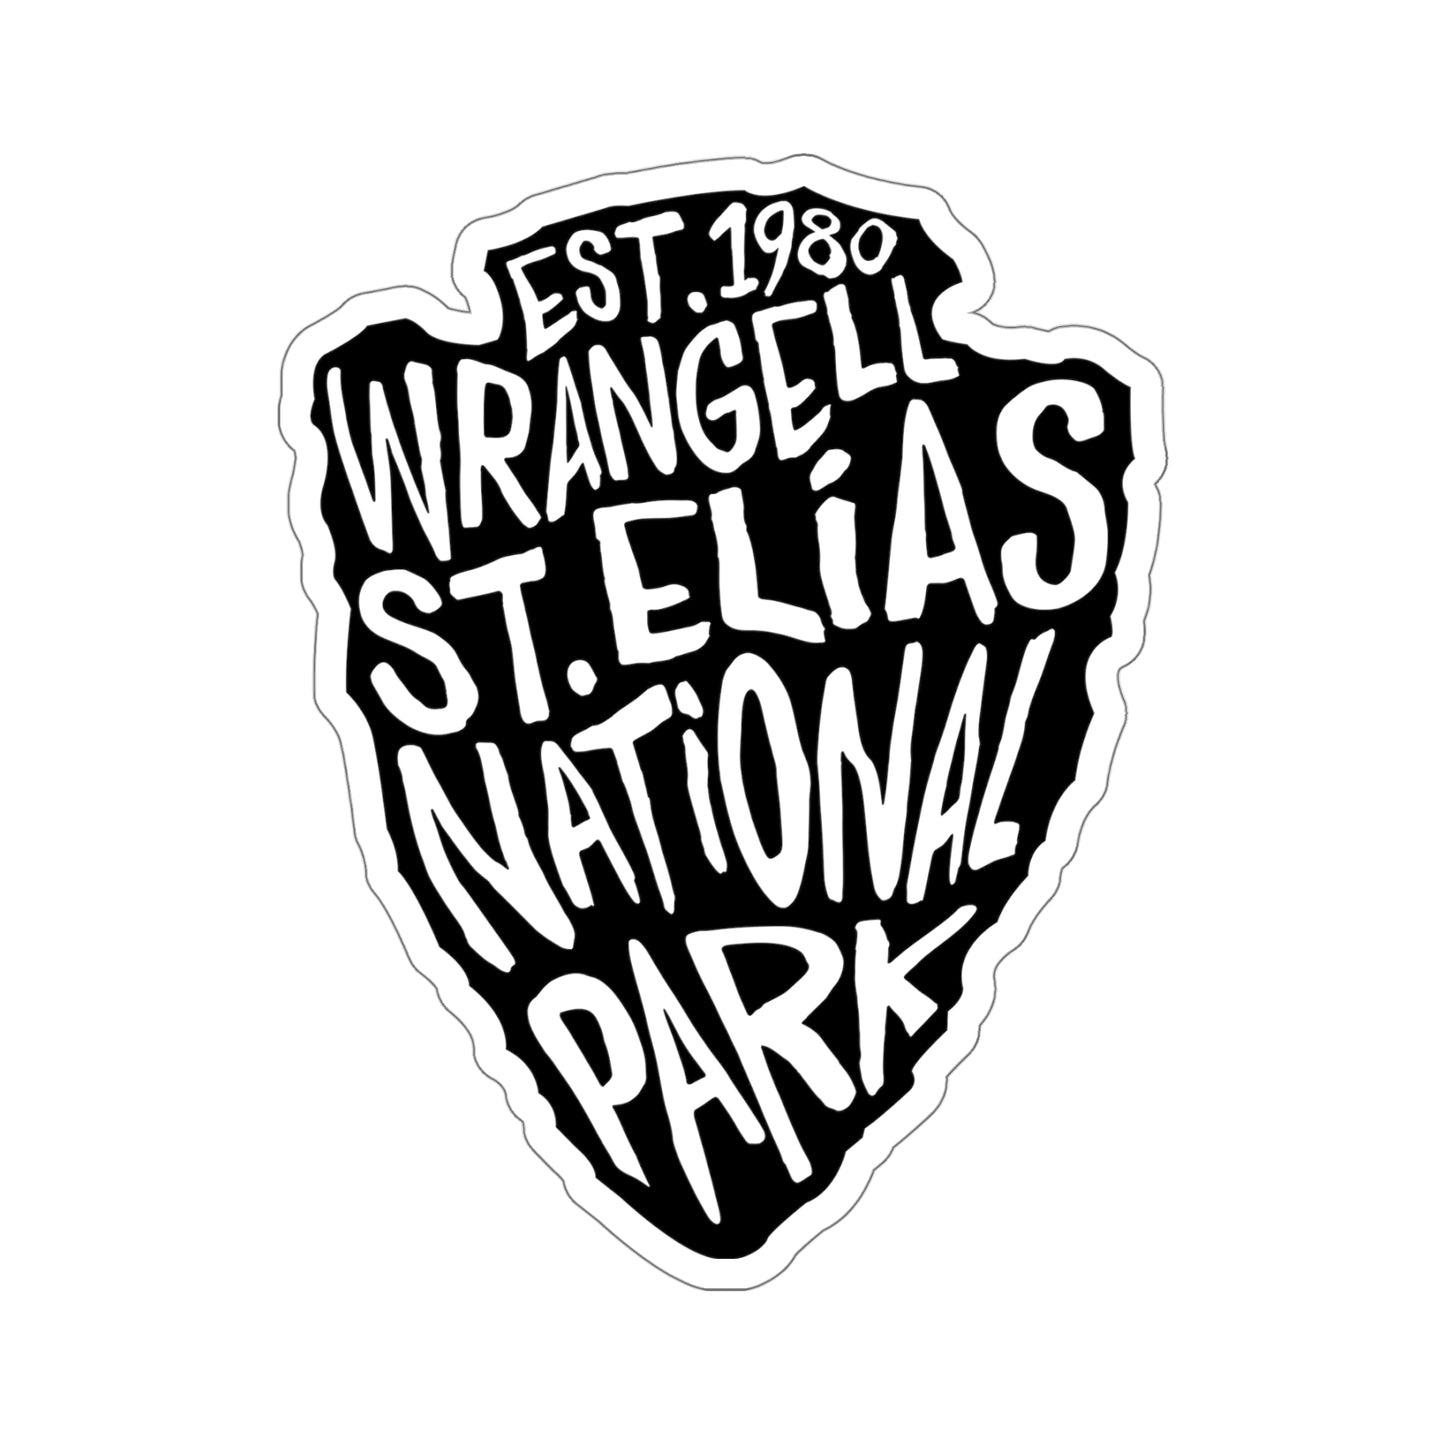 Wrangell St Elias National Park Sticker - Arrow Head Design